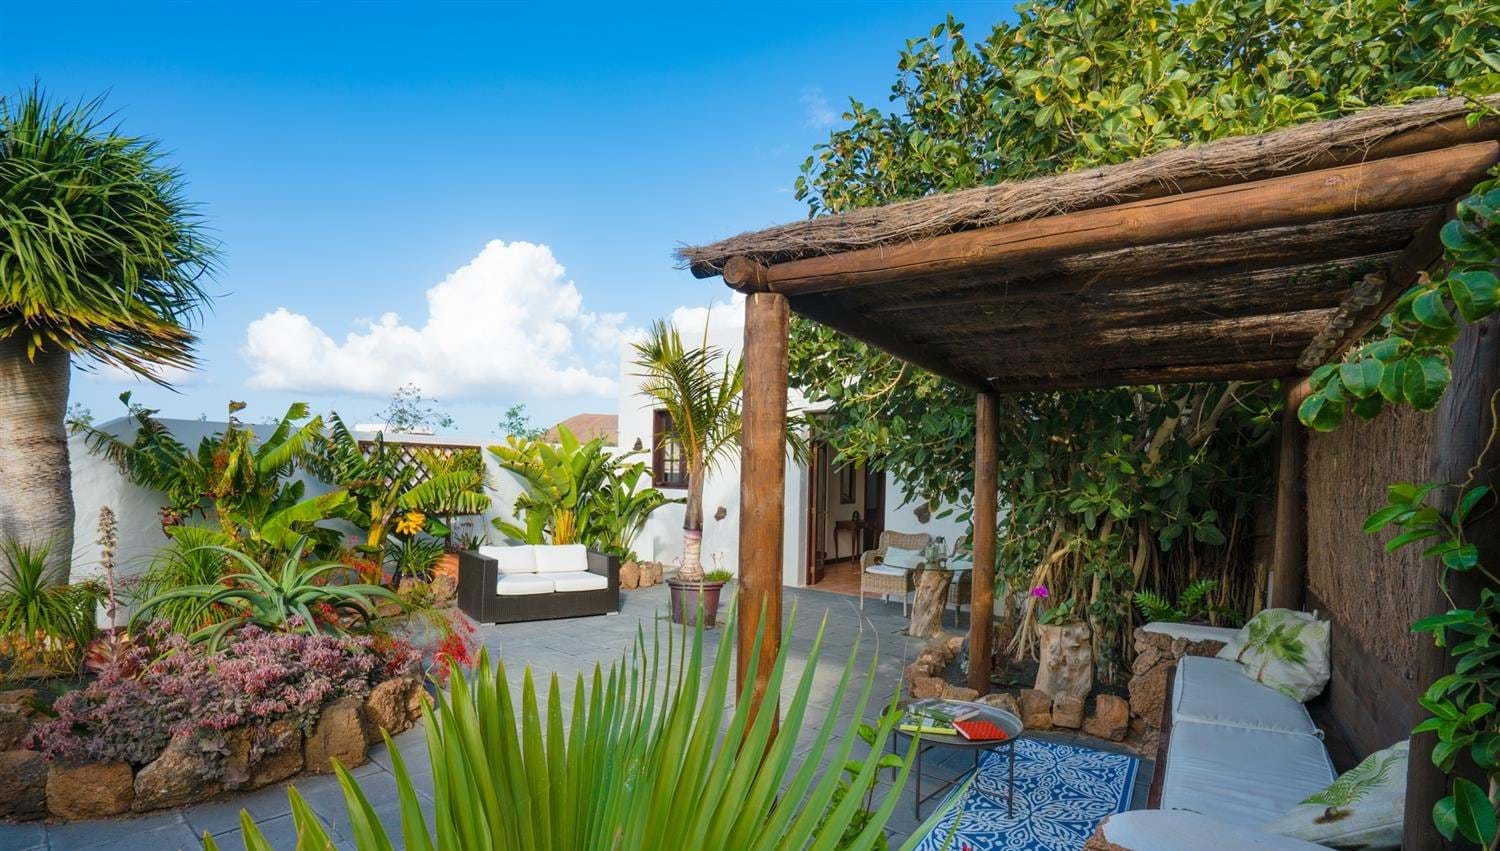 View of the garden and outdoor seating in the Garden Apartment at Finca Botanico, Lanzarote